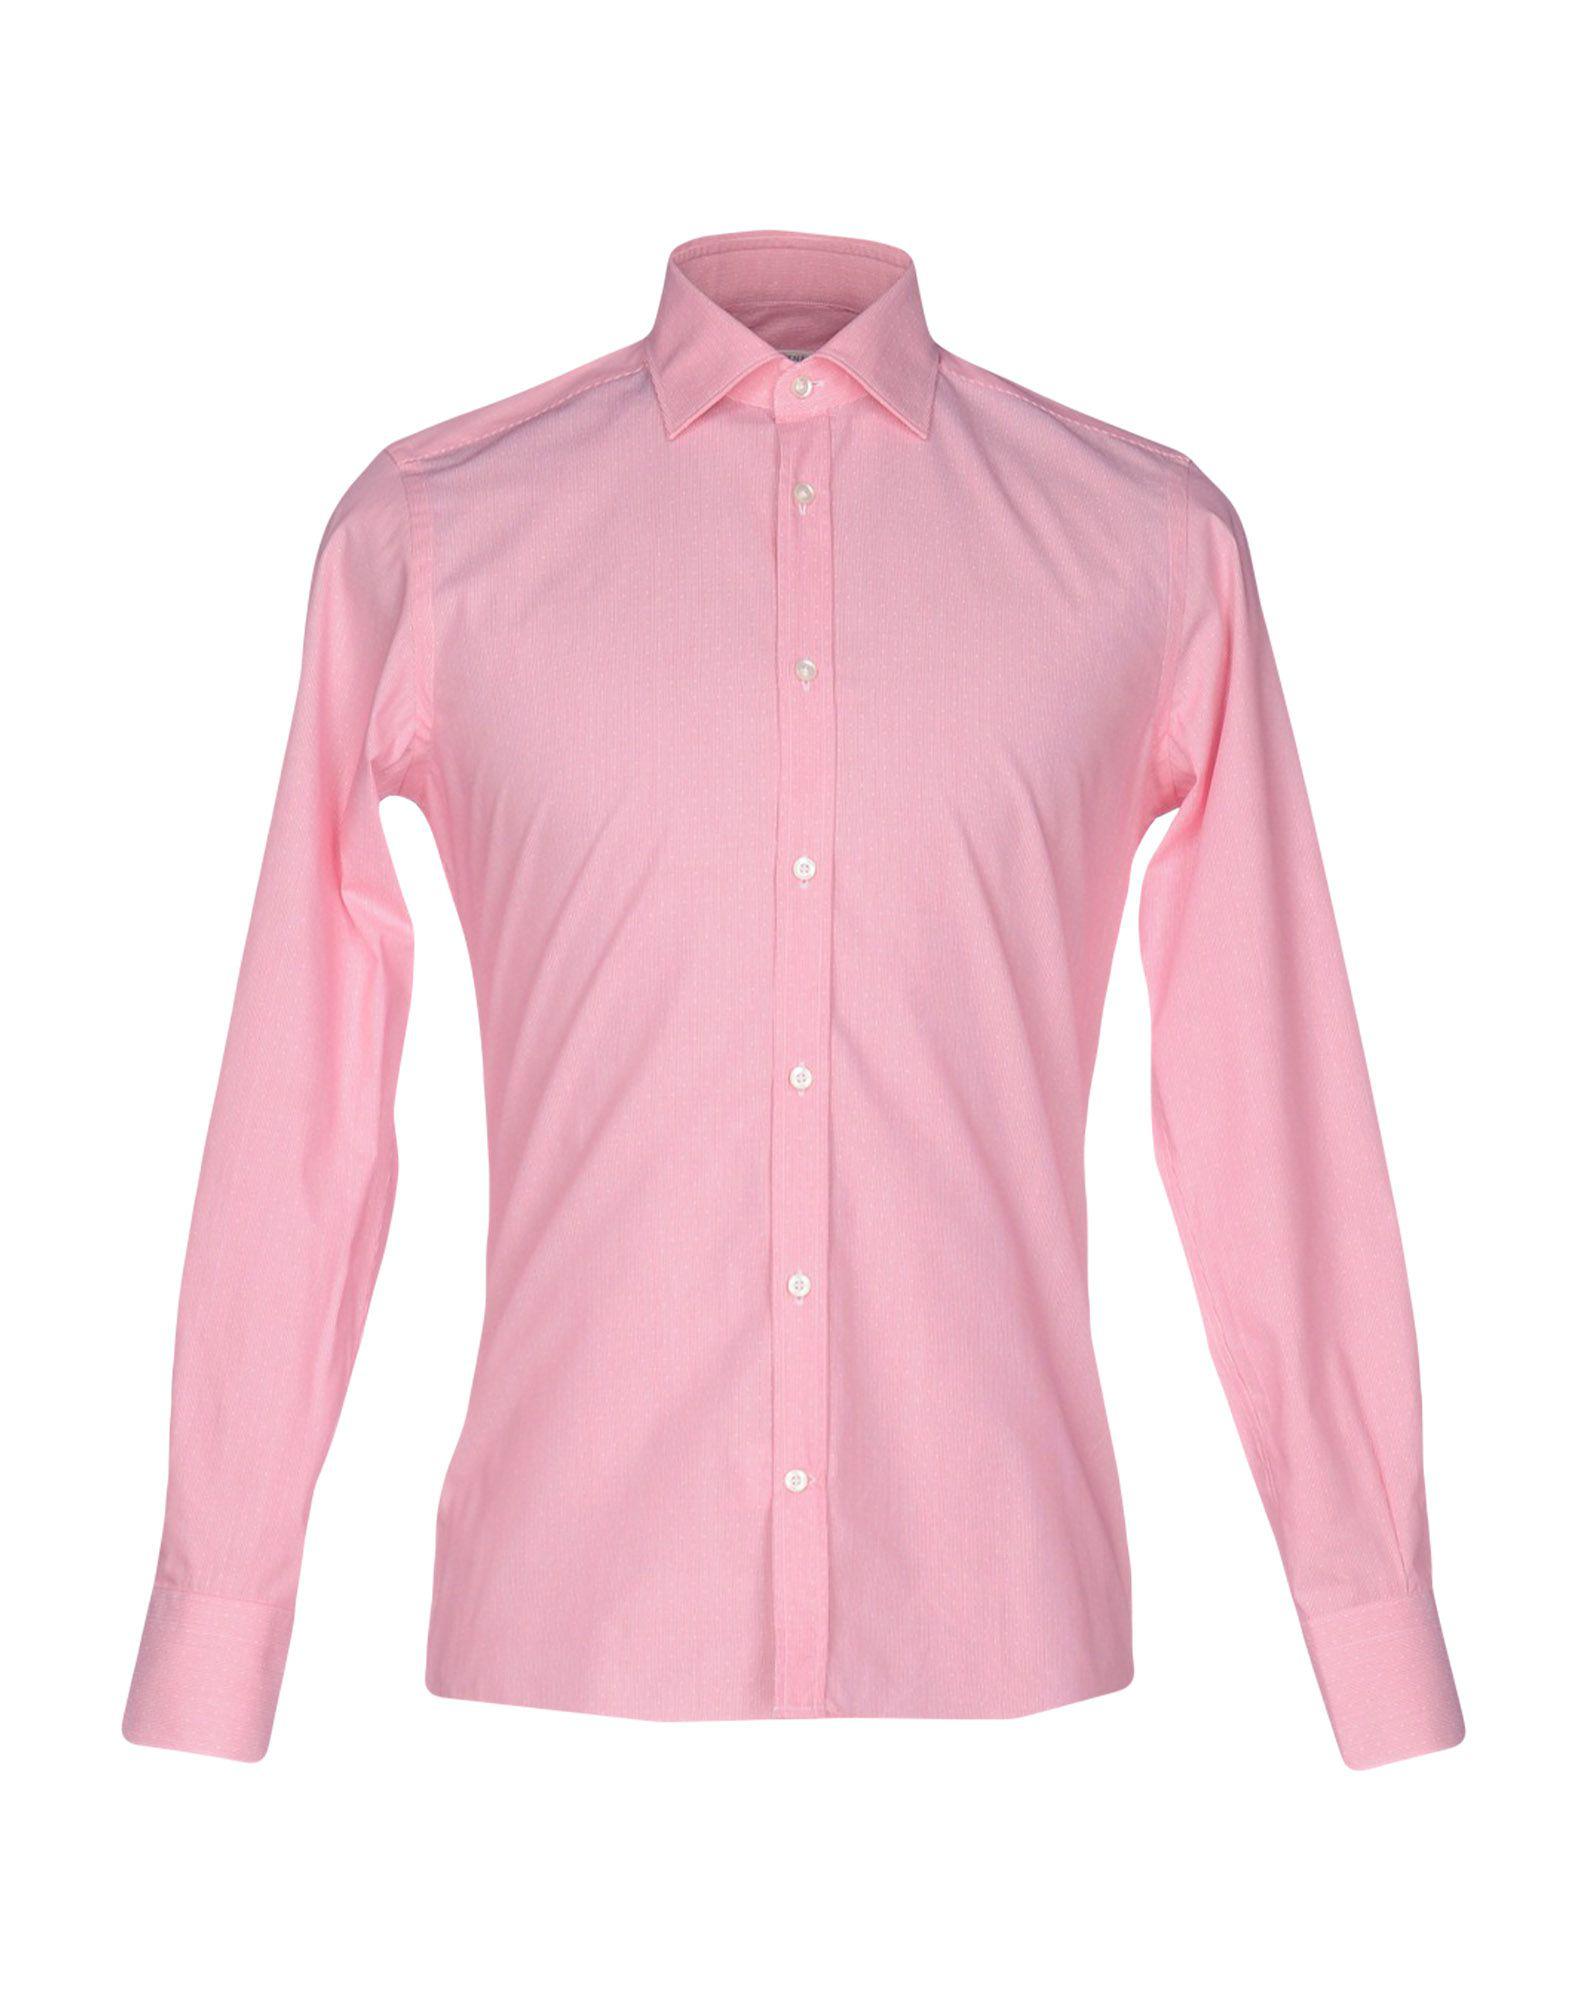 Lyst - Del Siena Shirt in Pink for Men